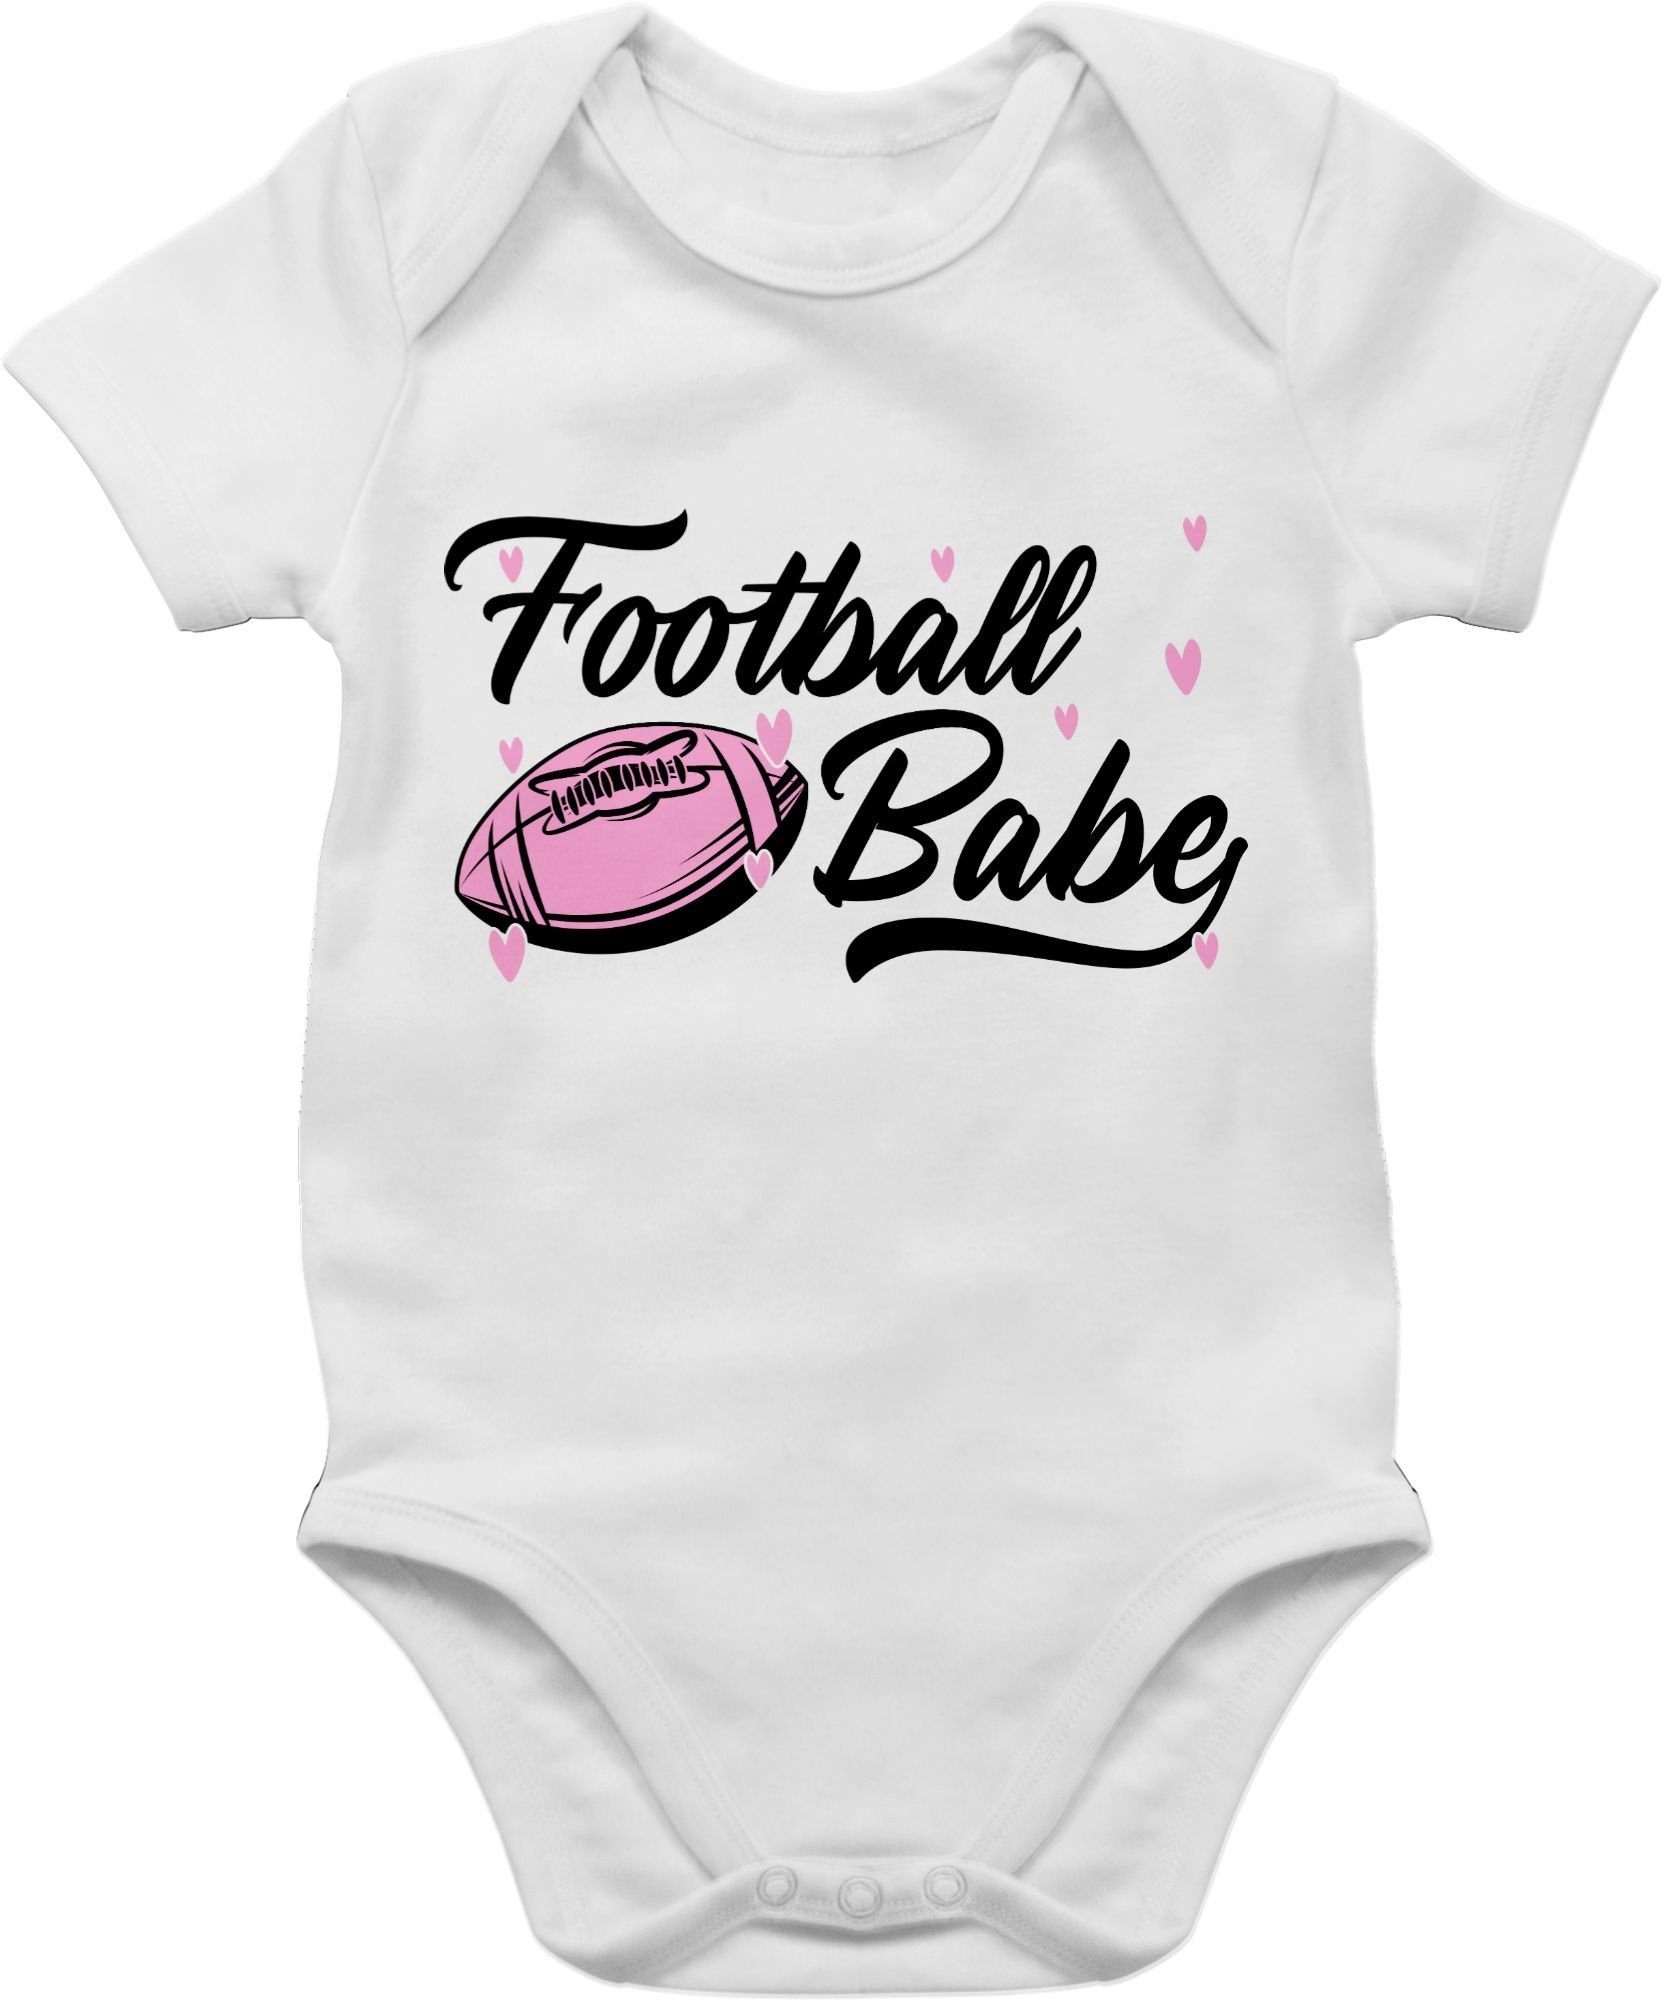 Shirtracer Shirtbody Football Babe rosa/schwarz Sport & Bewegung Baby 1 Weiß